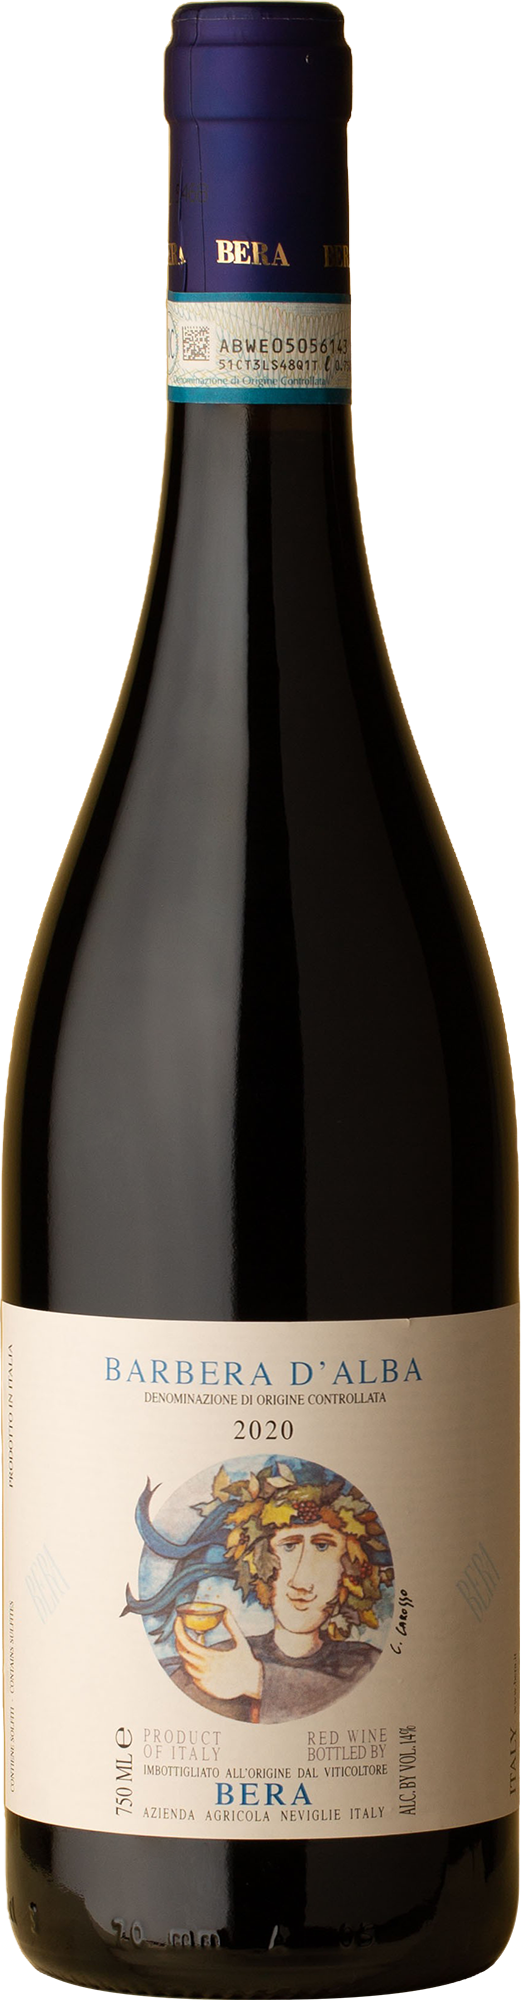 Bera - Barbera d'Alba 2020 Red Wine